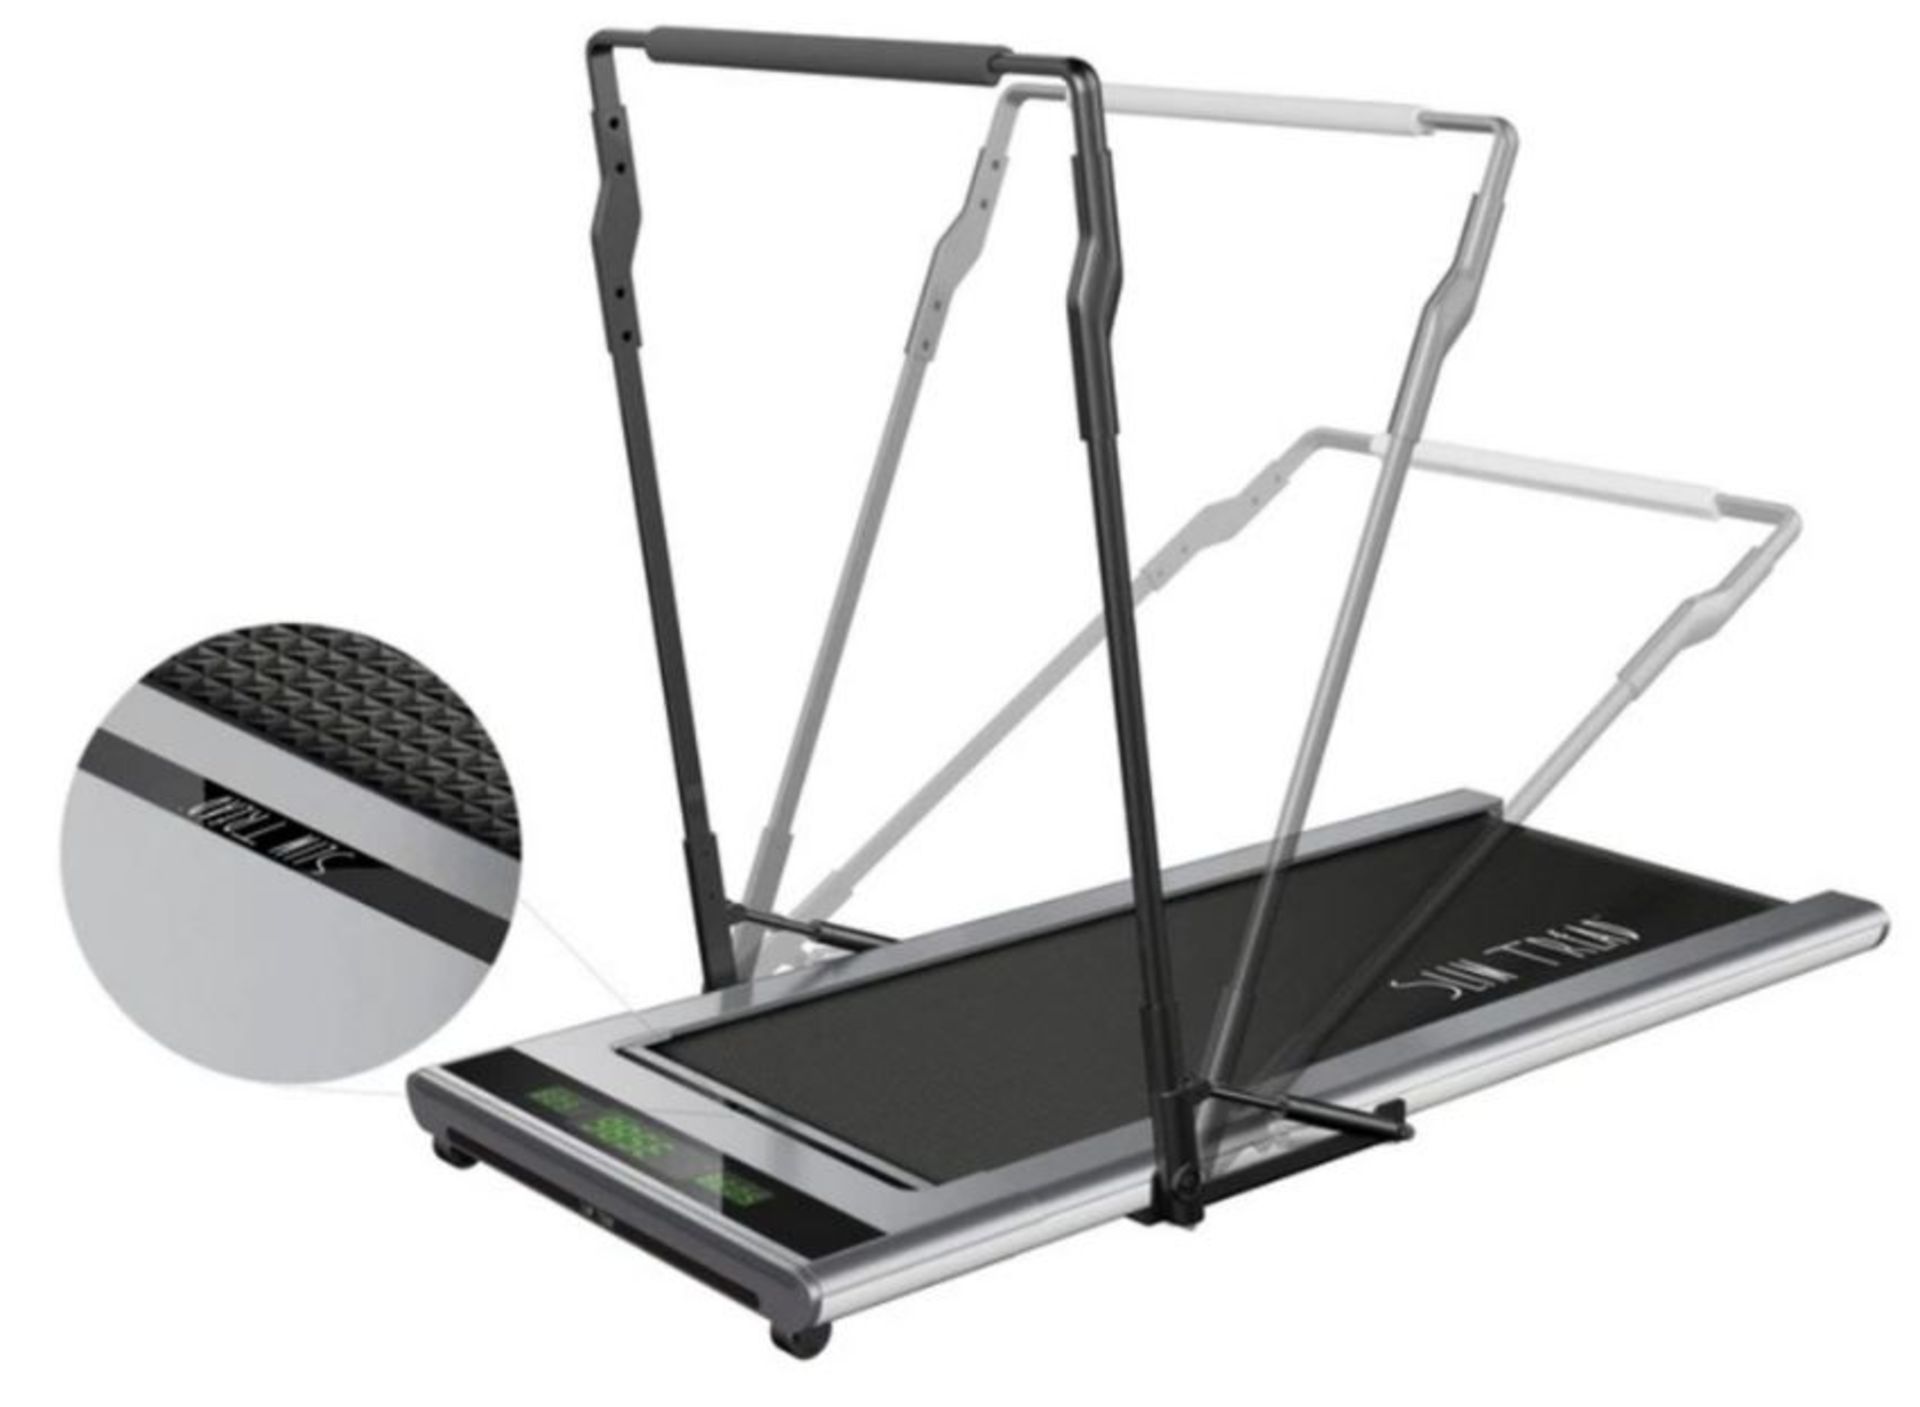 1 x Slim Tread Ultra Thin Smart Treadmill Running / Walking Machine - Lightweight With Folding - Image 5 of 10